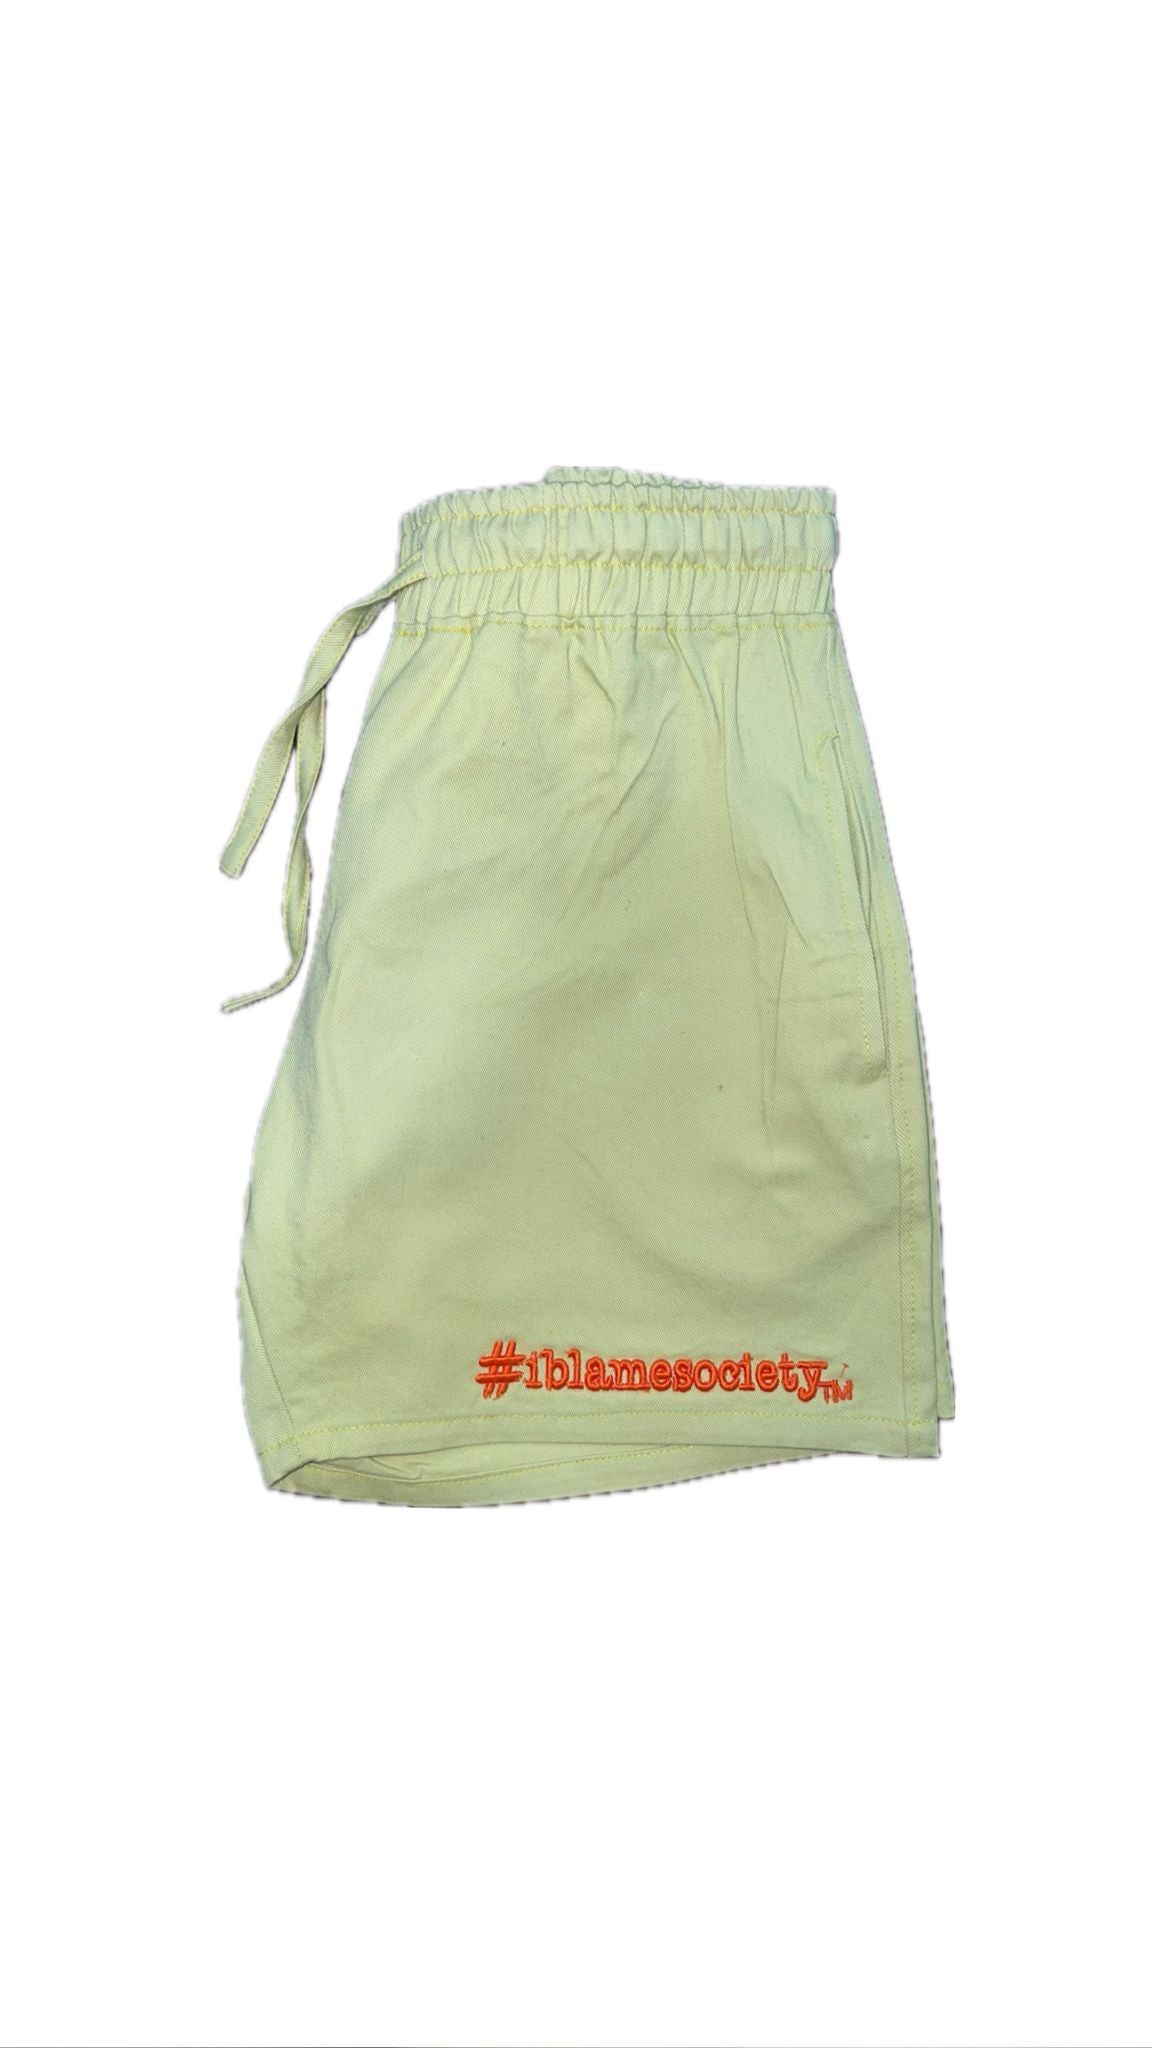 iblamesociety shorts - pre order